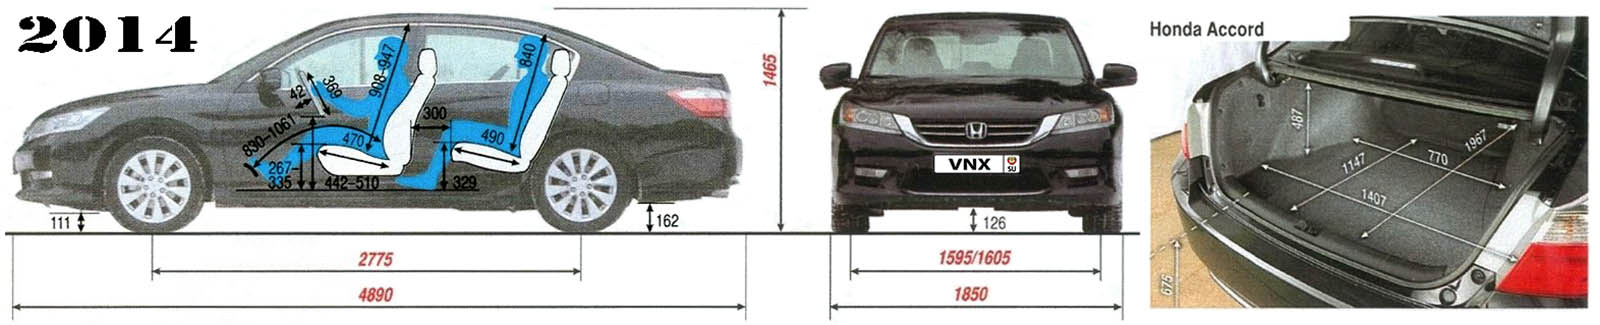 Габаритные размеры Хонда Аккорд 9 (dimensions Honda Accord mk9)